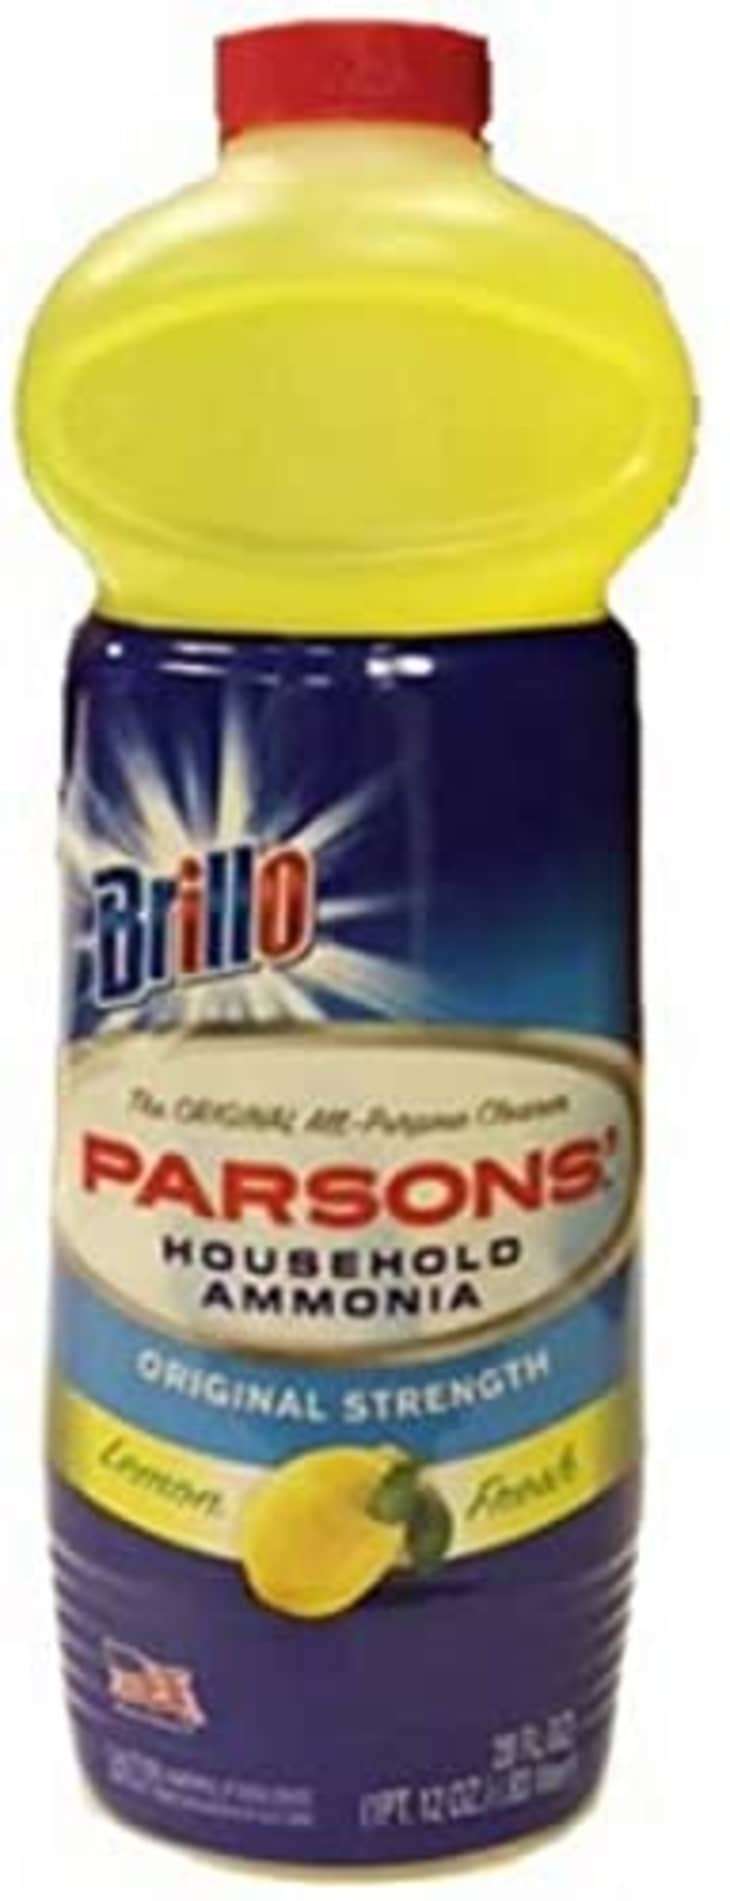 Product Image: Brillo Lemon Parsons Ammonia